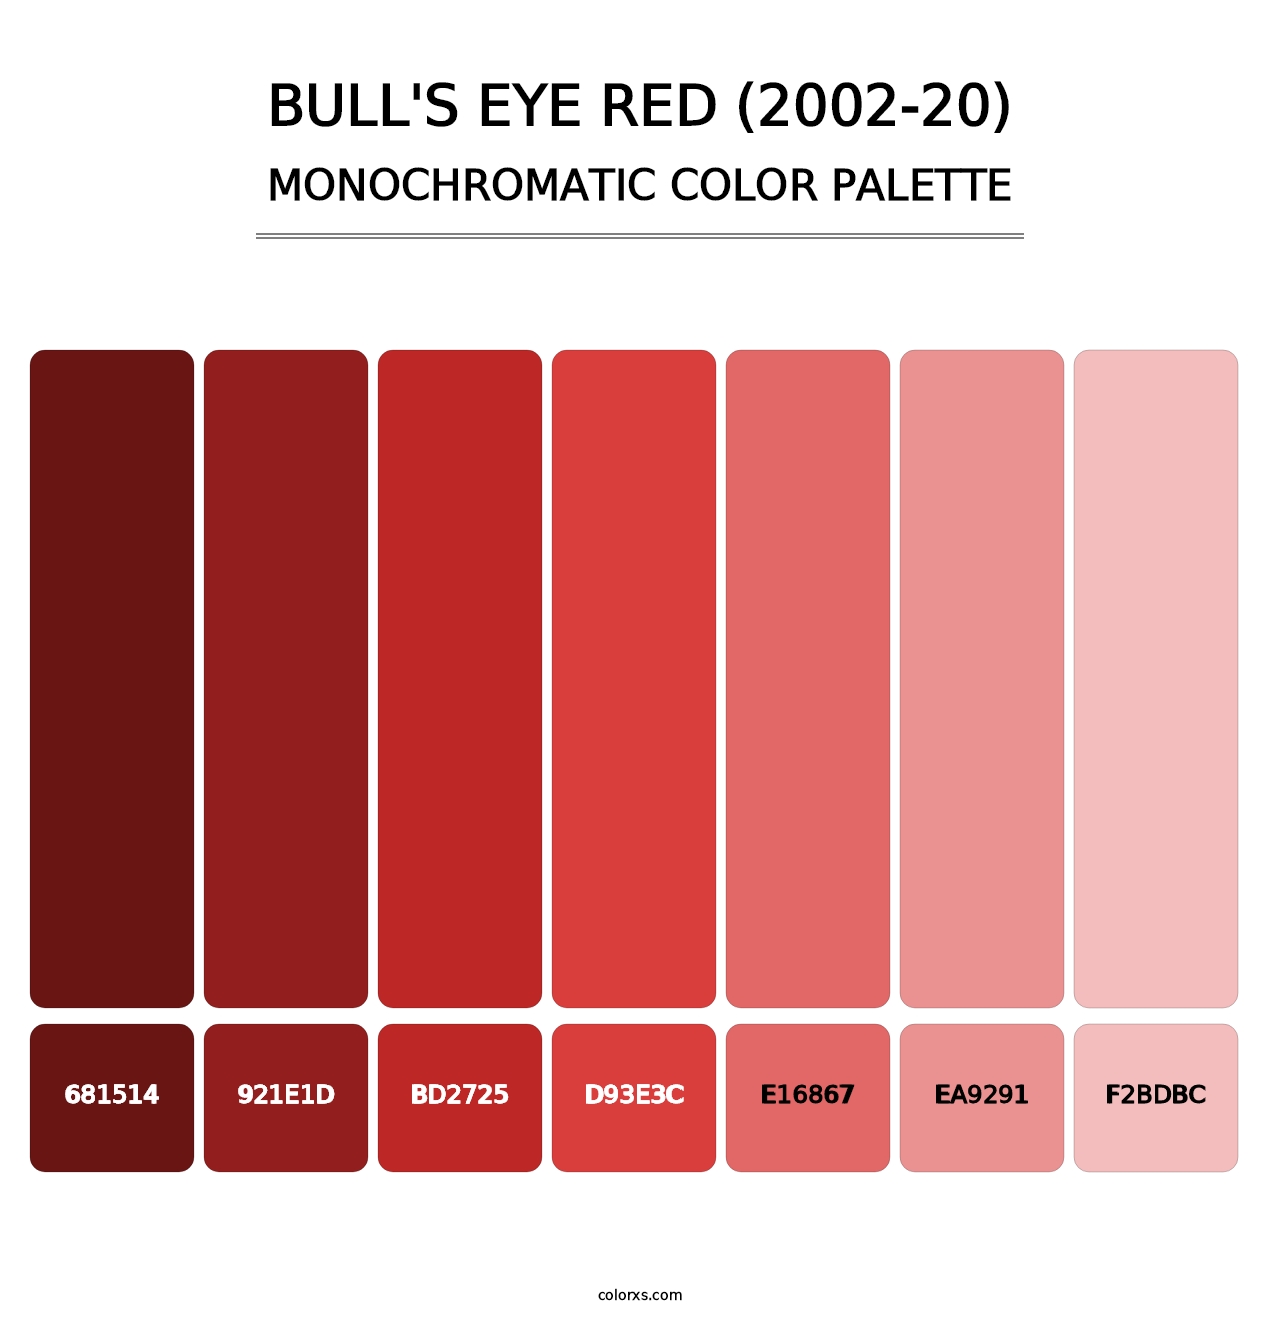 Bull's Eye Red (2002-20) - Monochromatic Color Palette